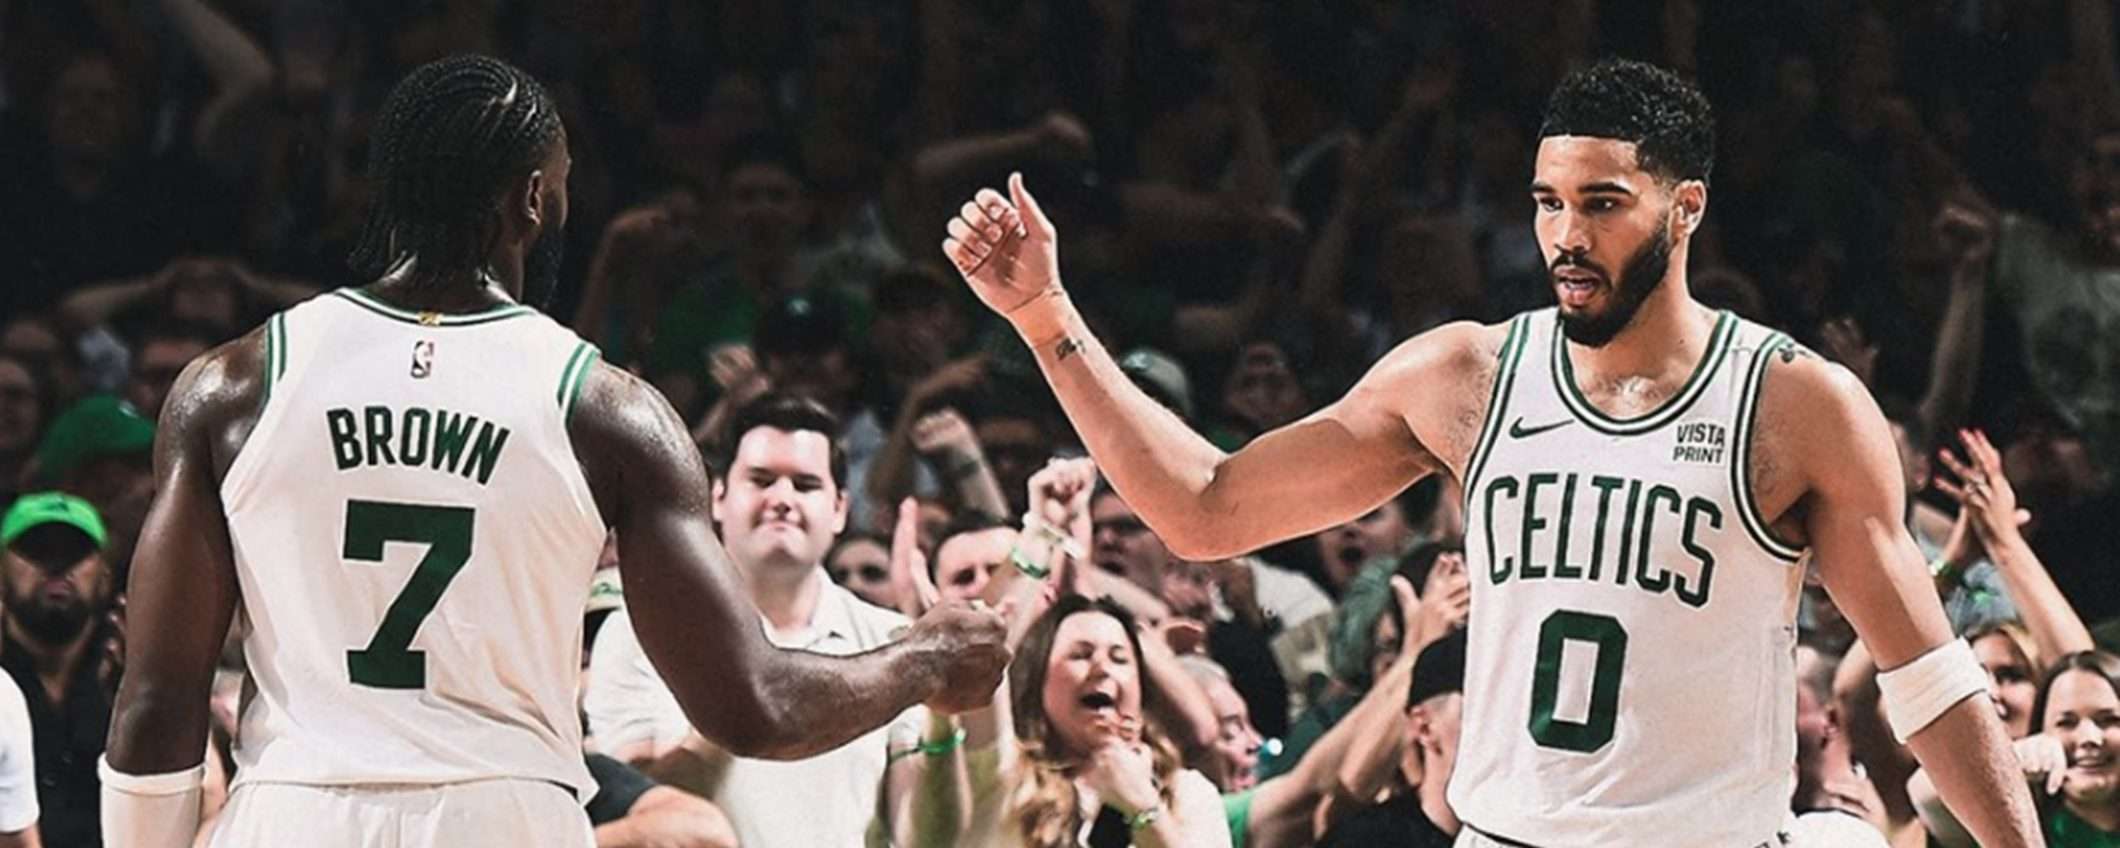 NBA, Boston Celtics-Indiana Pacers (gara 2): come vederla in streaming